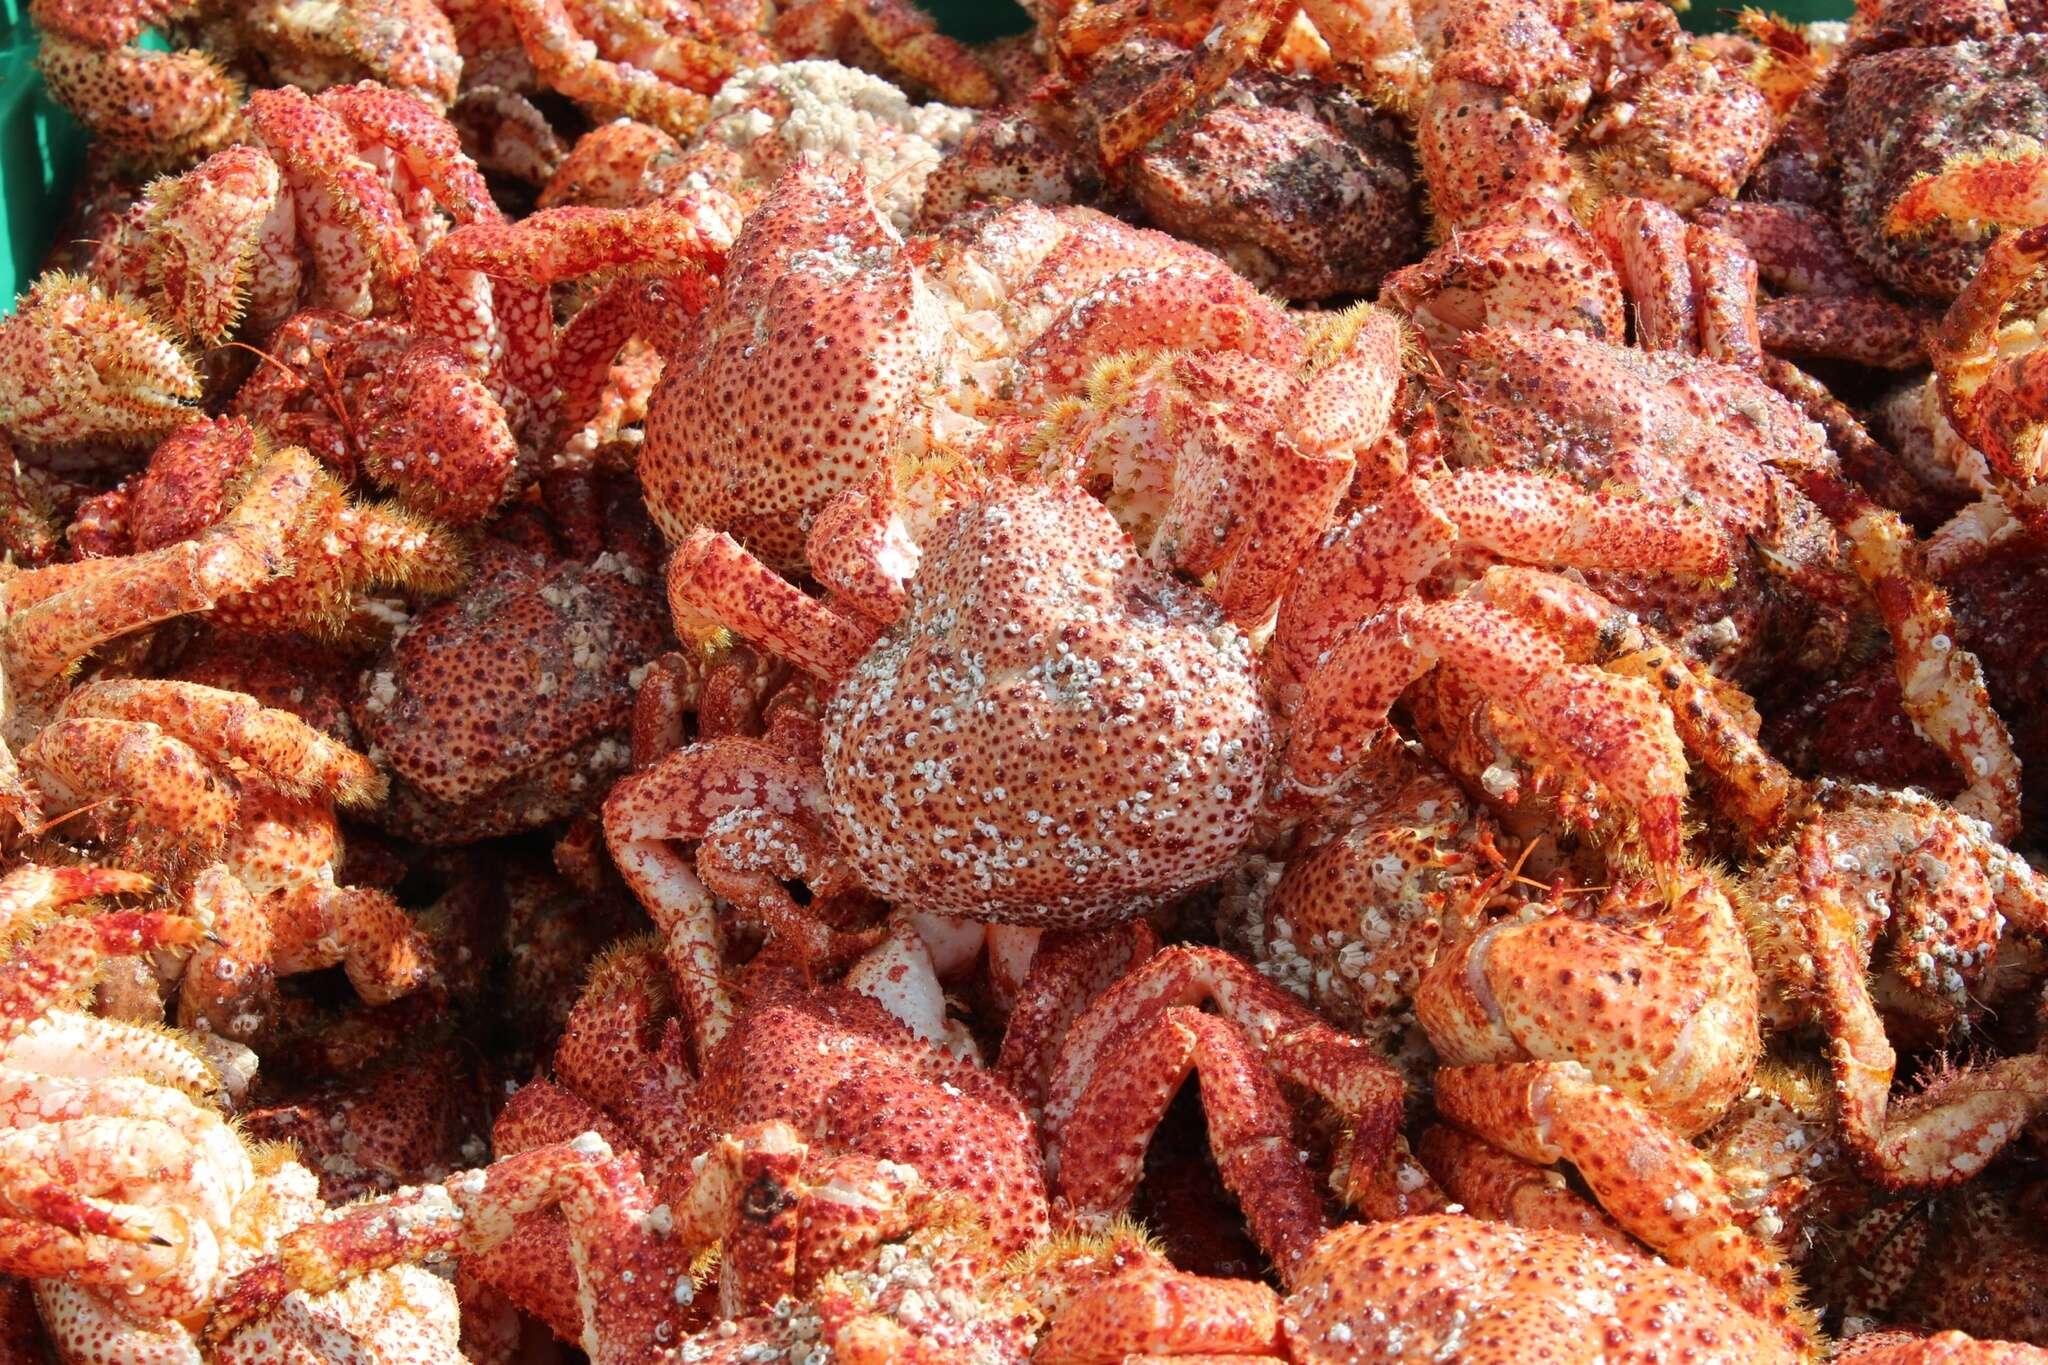 Image of false southern king crab